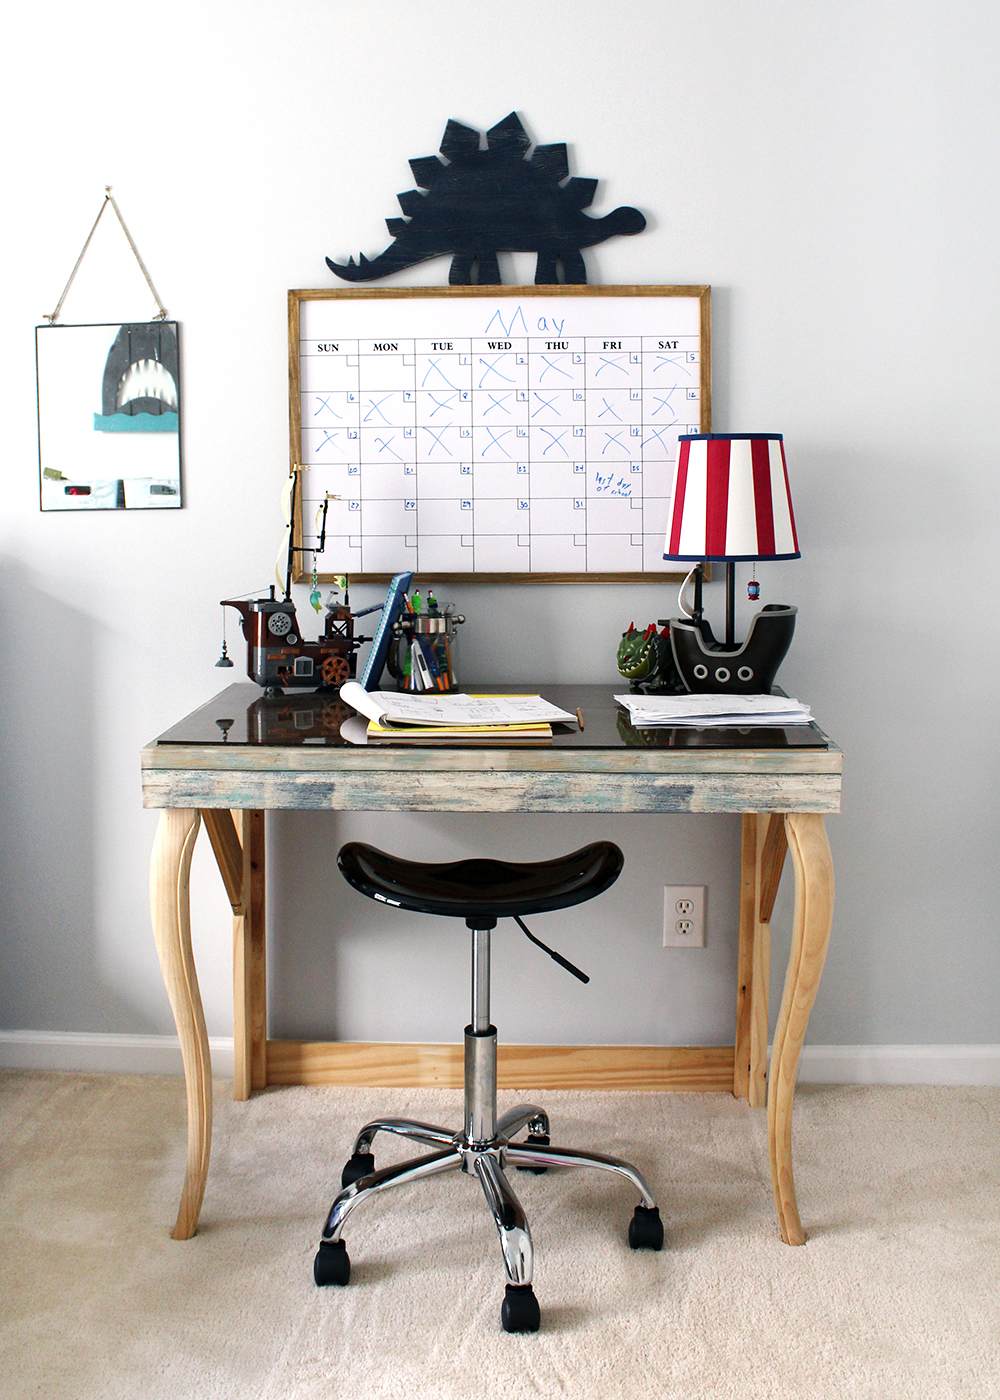 DIY desk improvement with shabby inspired wallpaper in blue